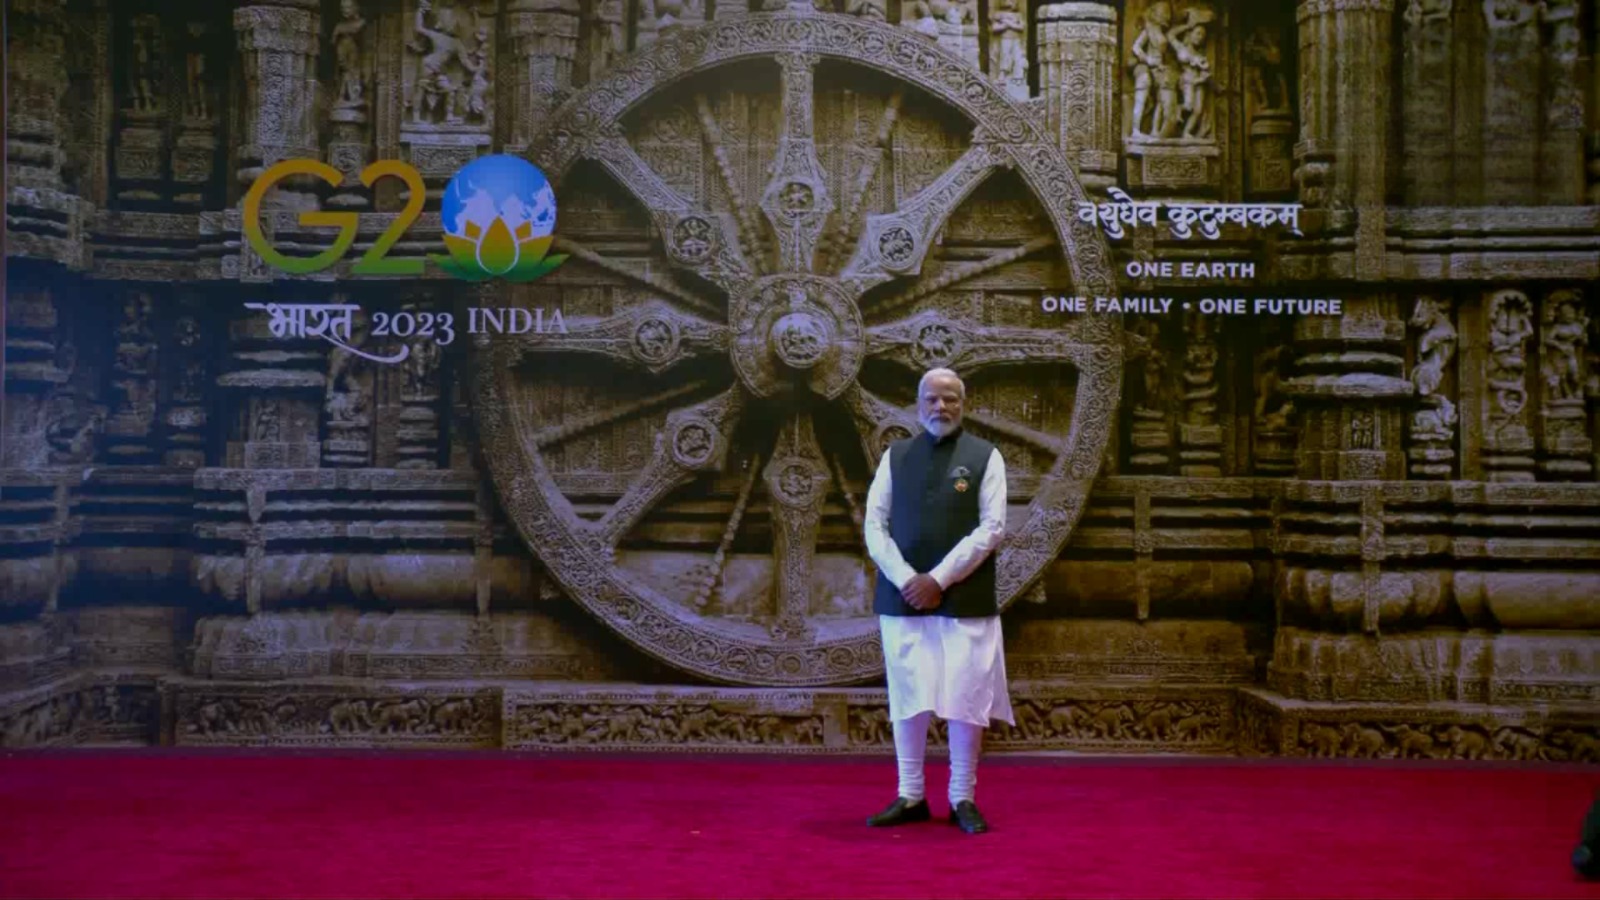 Odisha’s timeless wonder Konark Wheel replica serves as backdrop of PM Modi's welcome handshake with G20 leaders